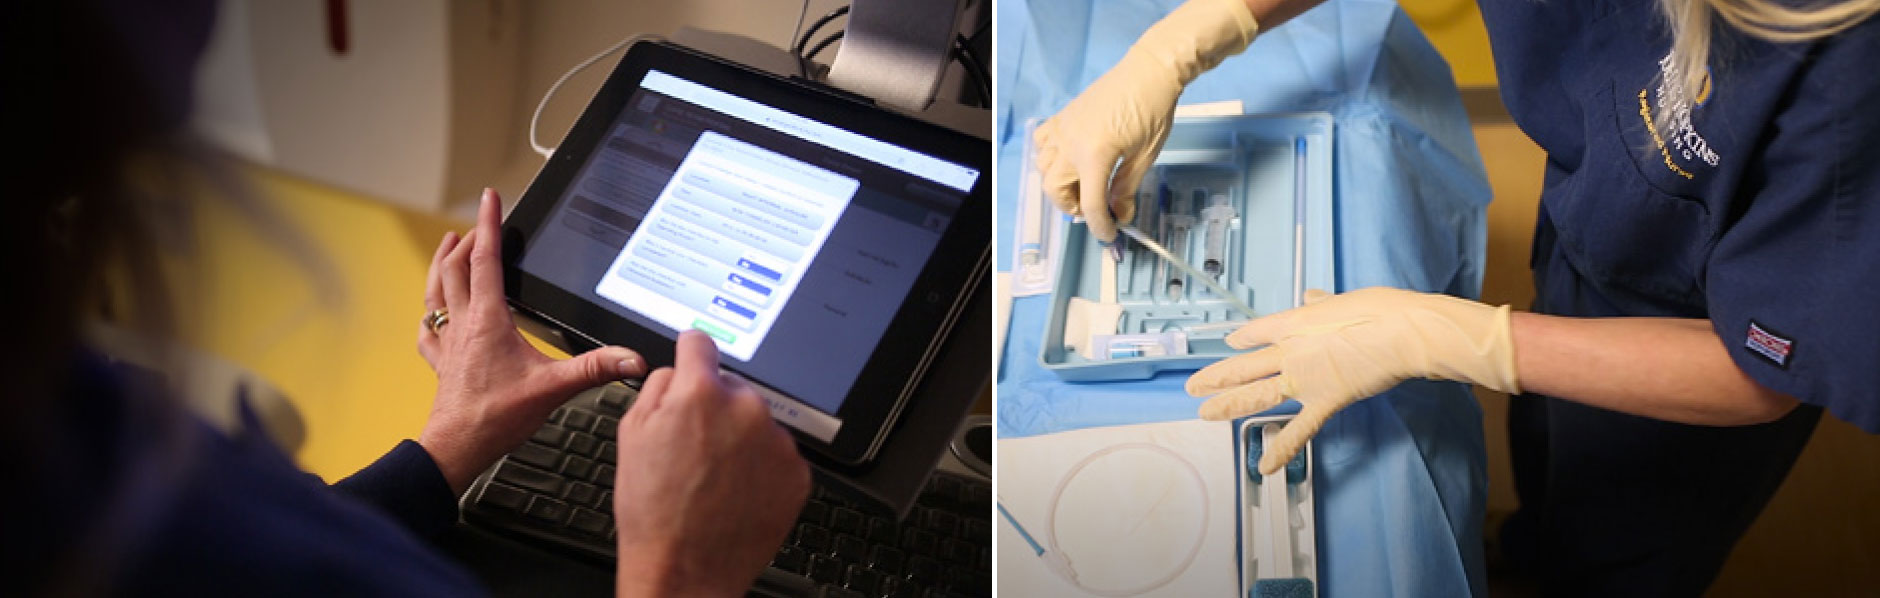 Checklist pilot program in the Johns Hopkins Hospital surgical ICU; a nurse unpacks a central
venous catheter kit.